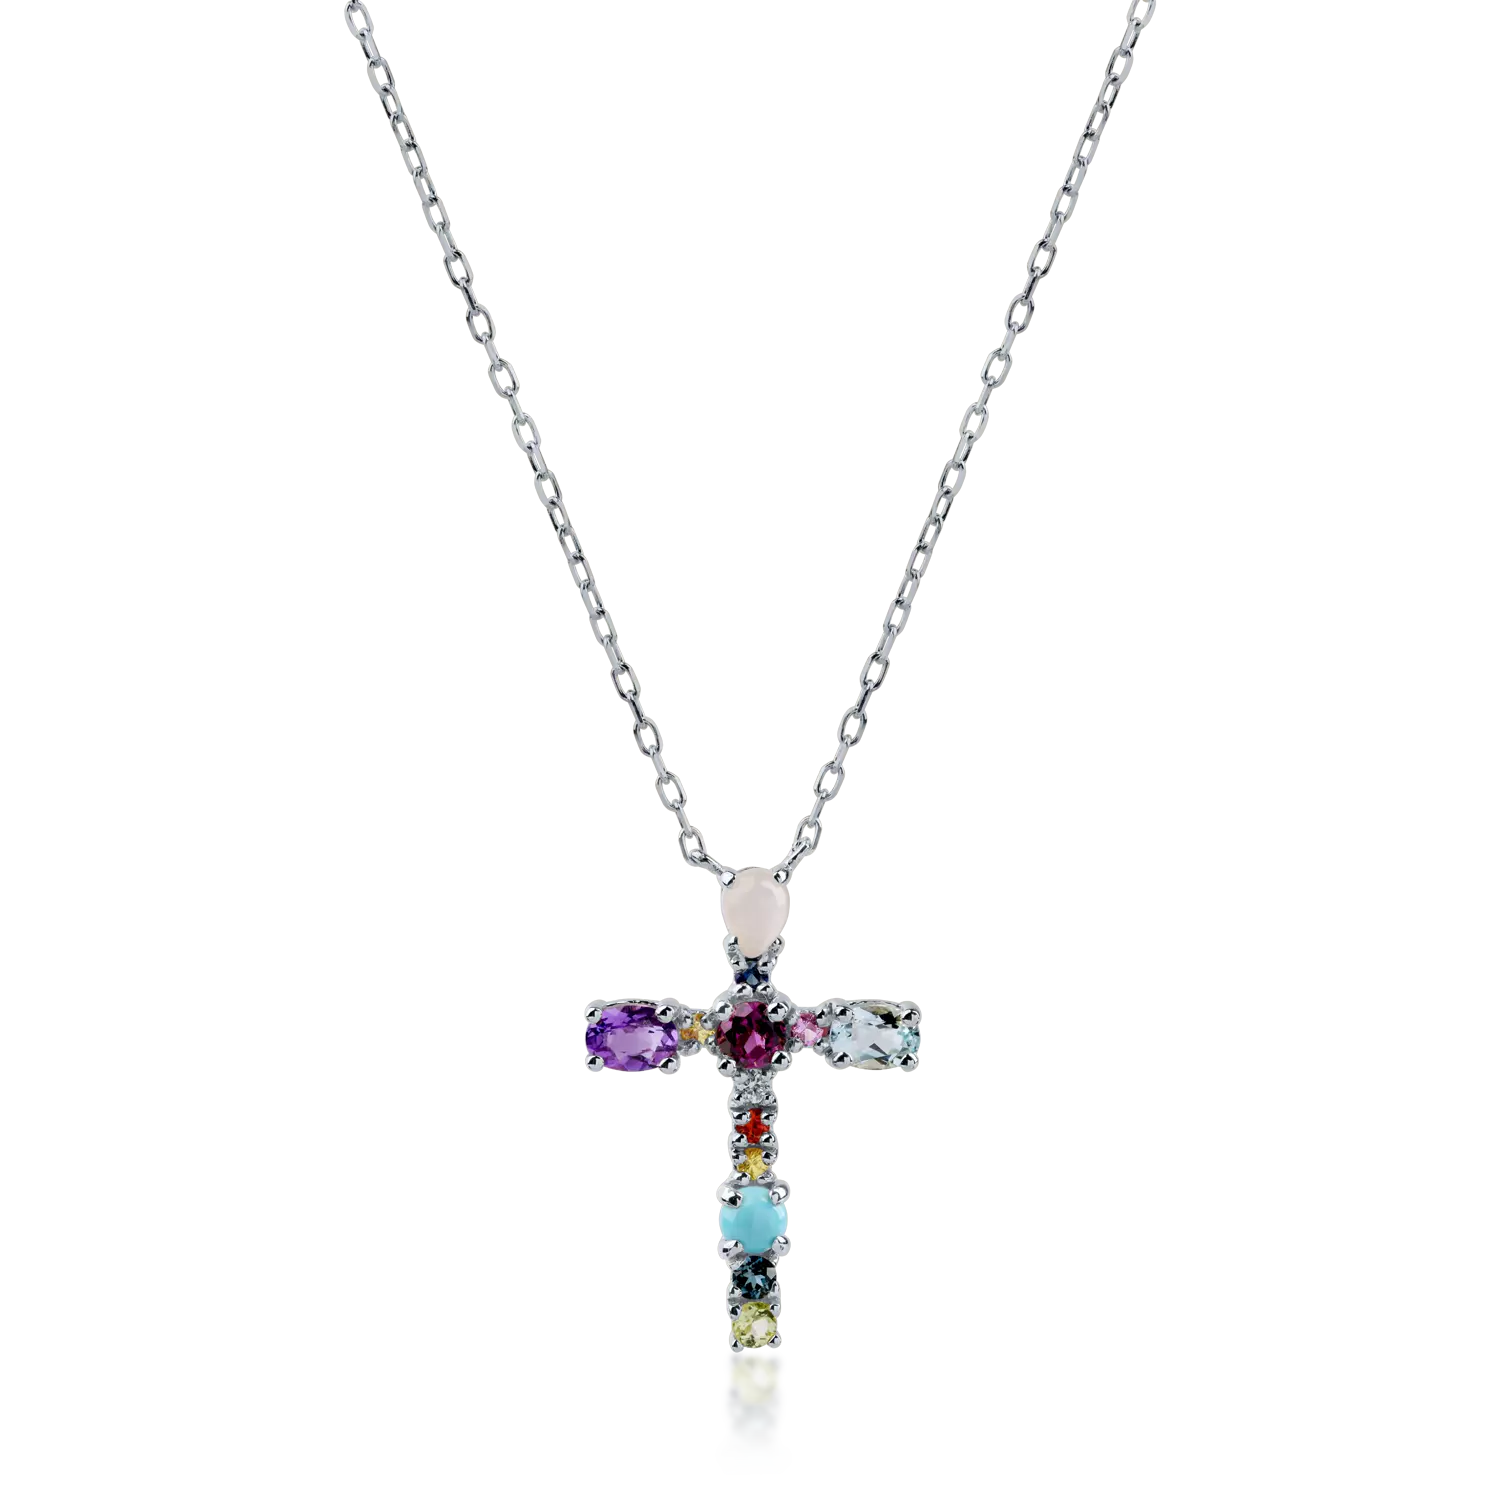 White gold cross pendant necklace with 1.03ct precious and semi-precious stones